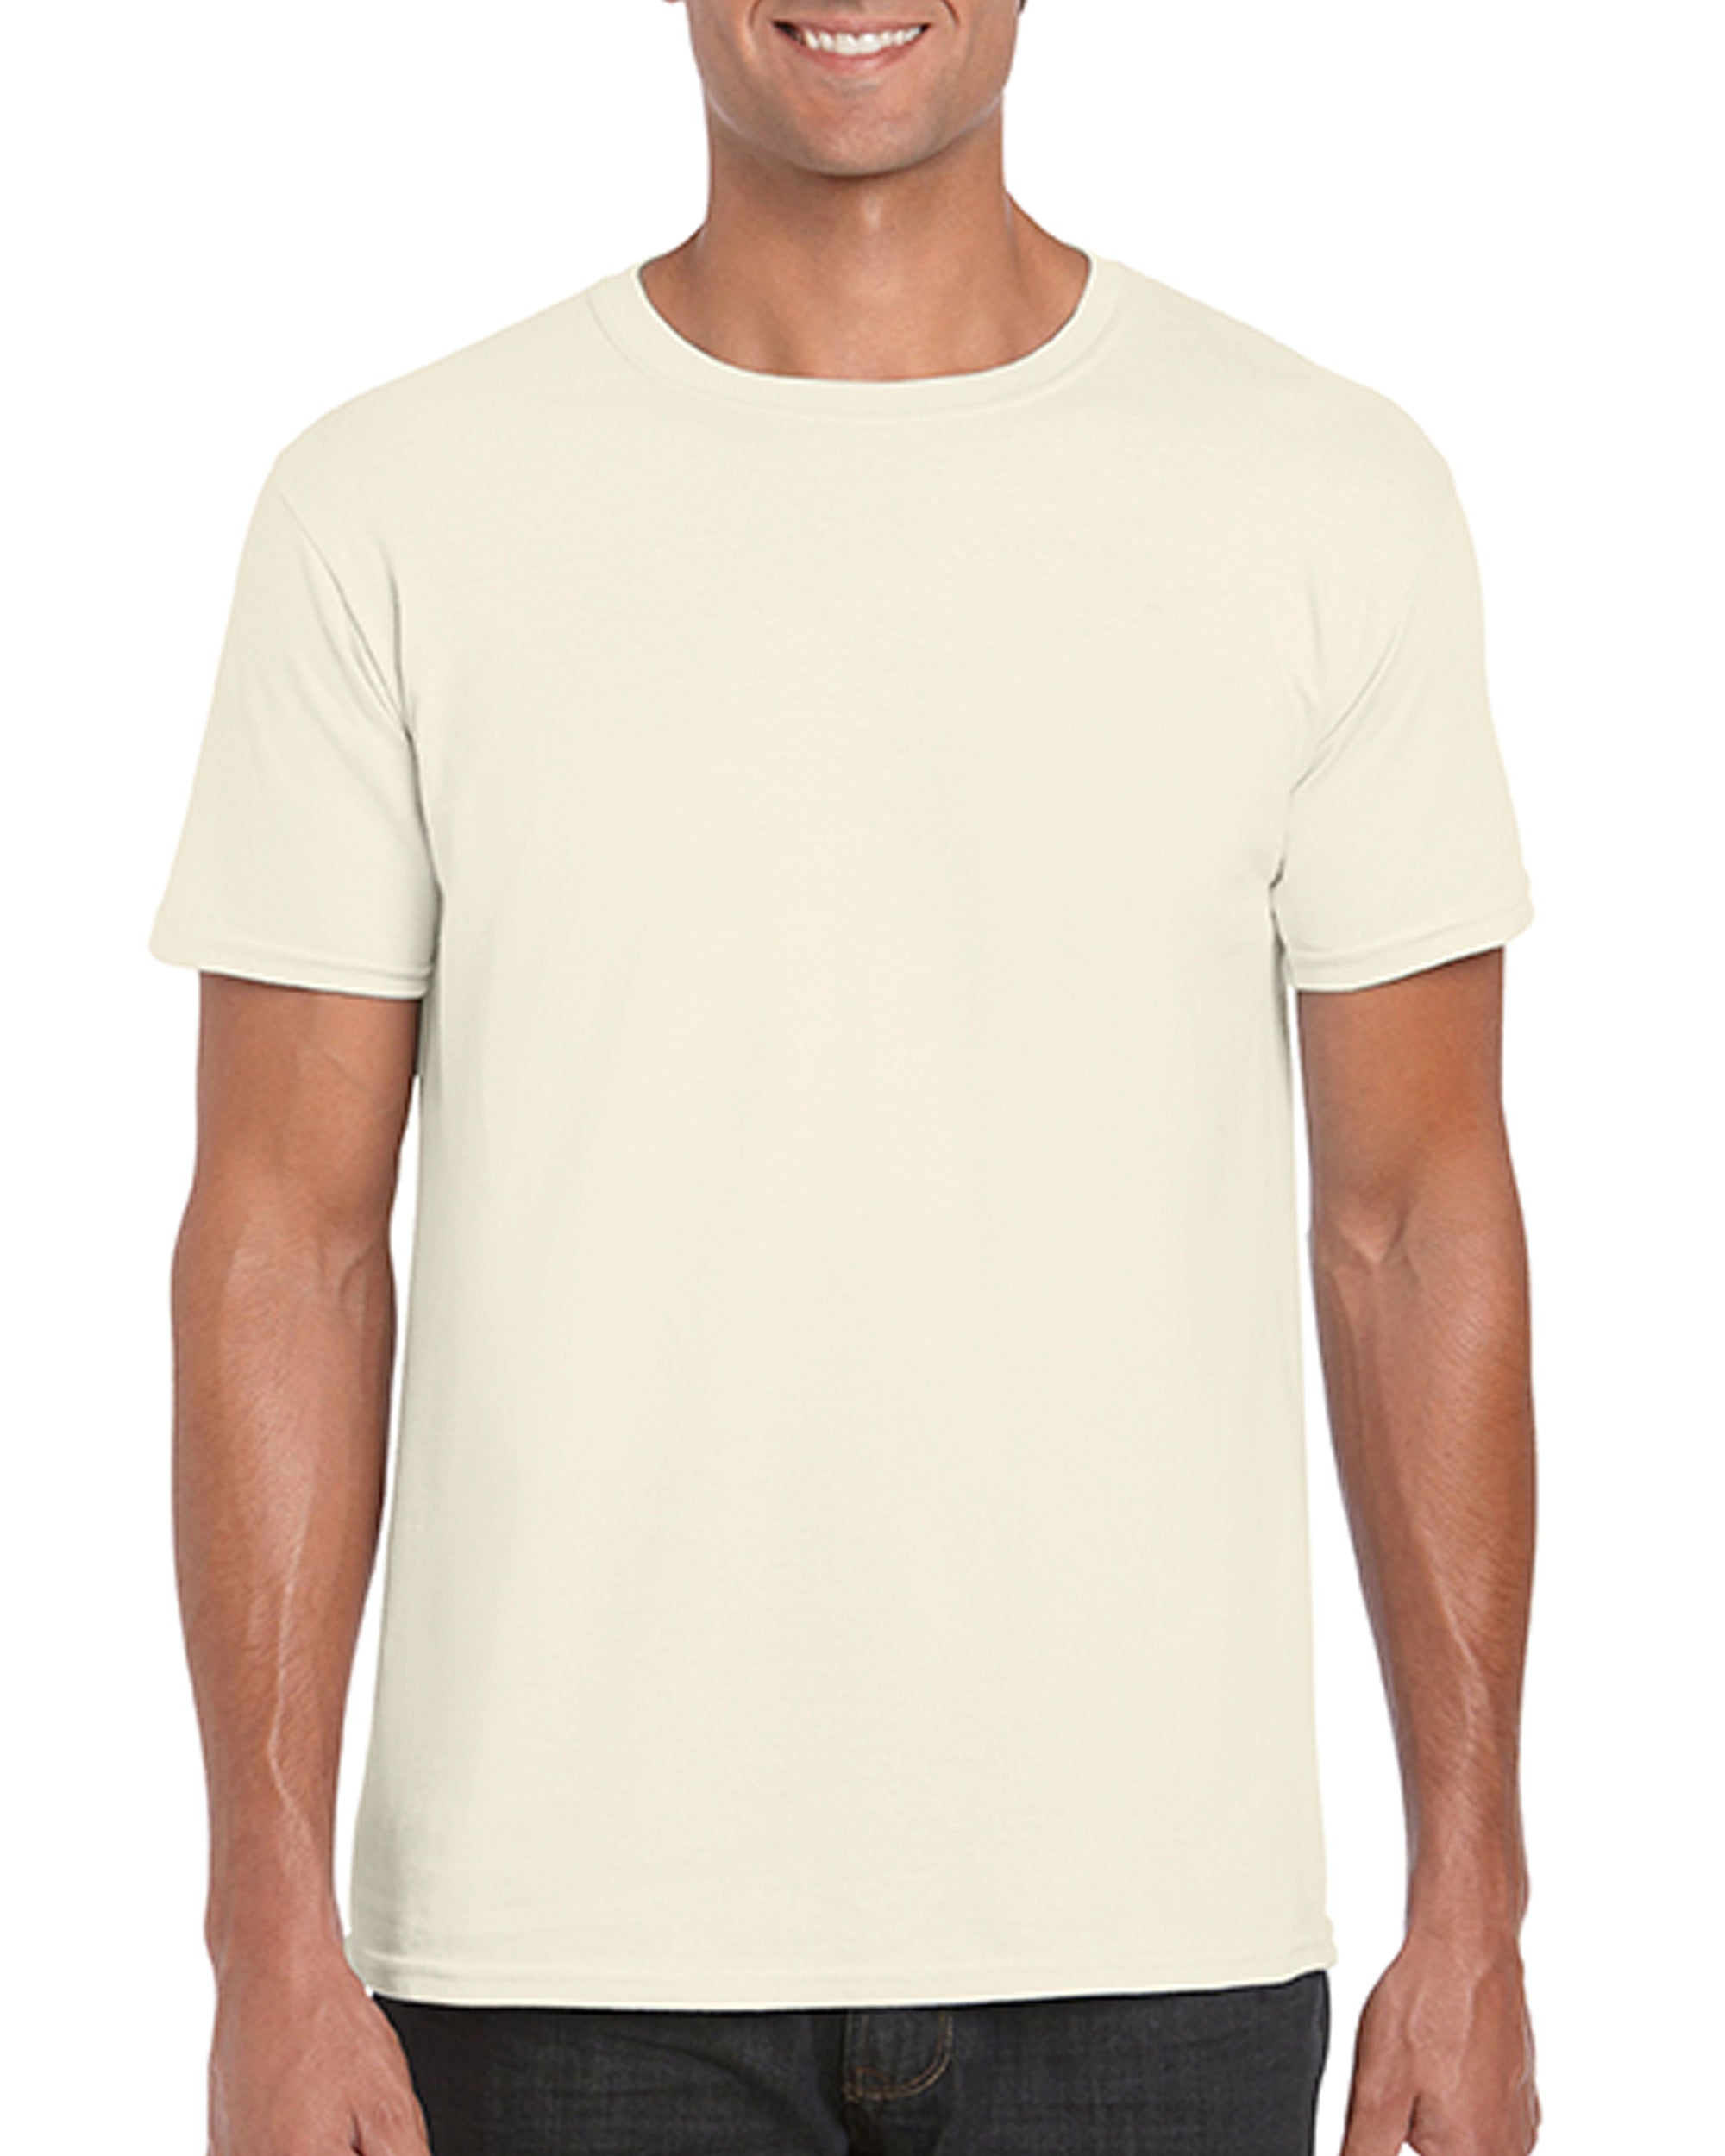 Uni-Sex Softstyle Adult T-Shirt